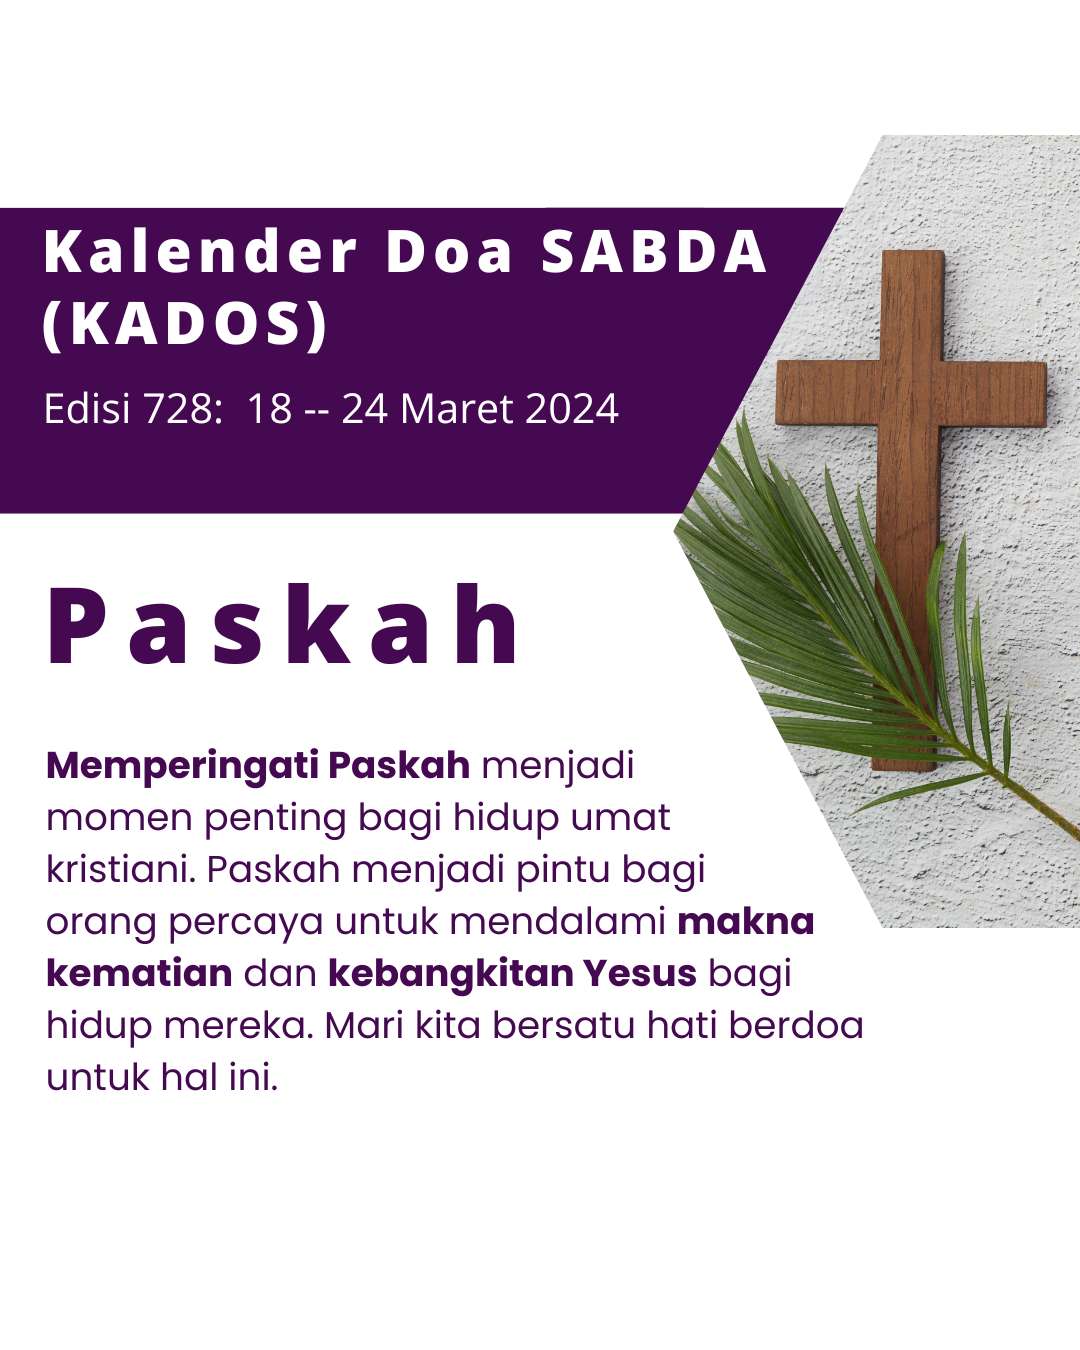 Pokok Doa KADOS 18 -- 24 Maret 2024